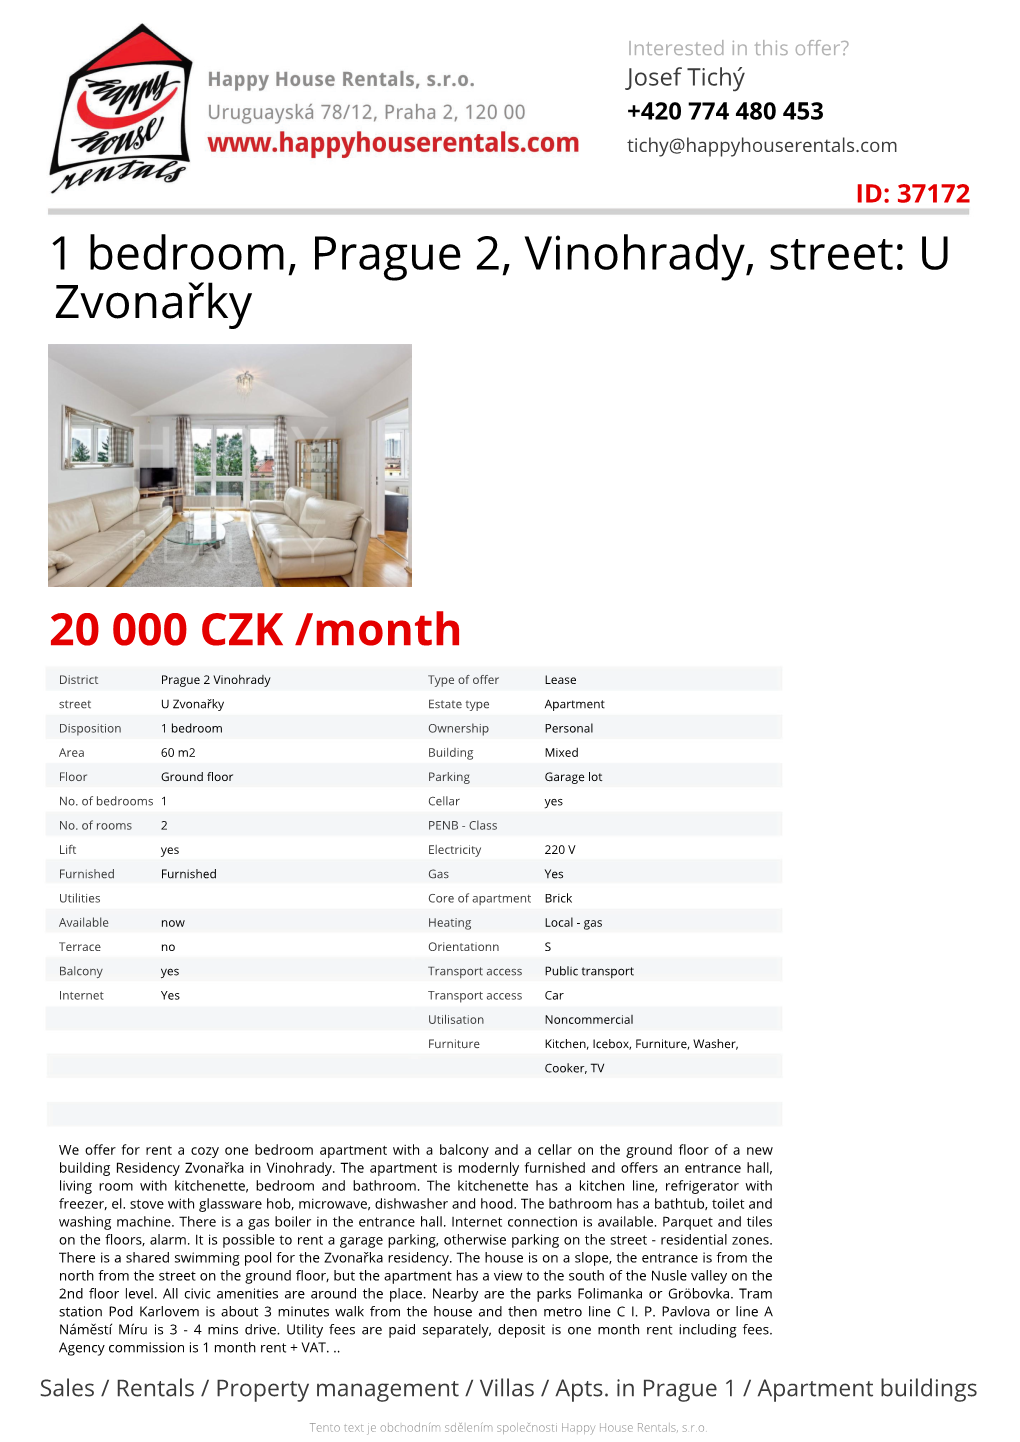 1 Bedroom, Prague 2, Vinohrady, Street: U Zvonařky